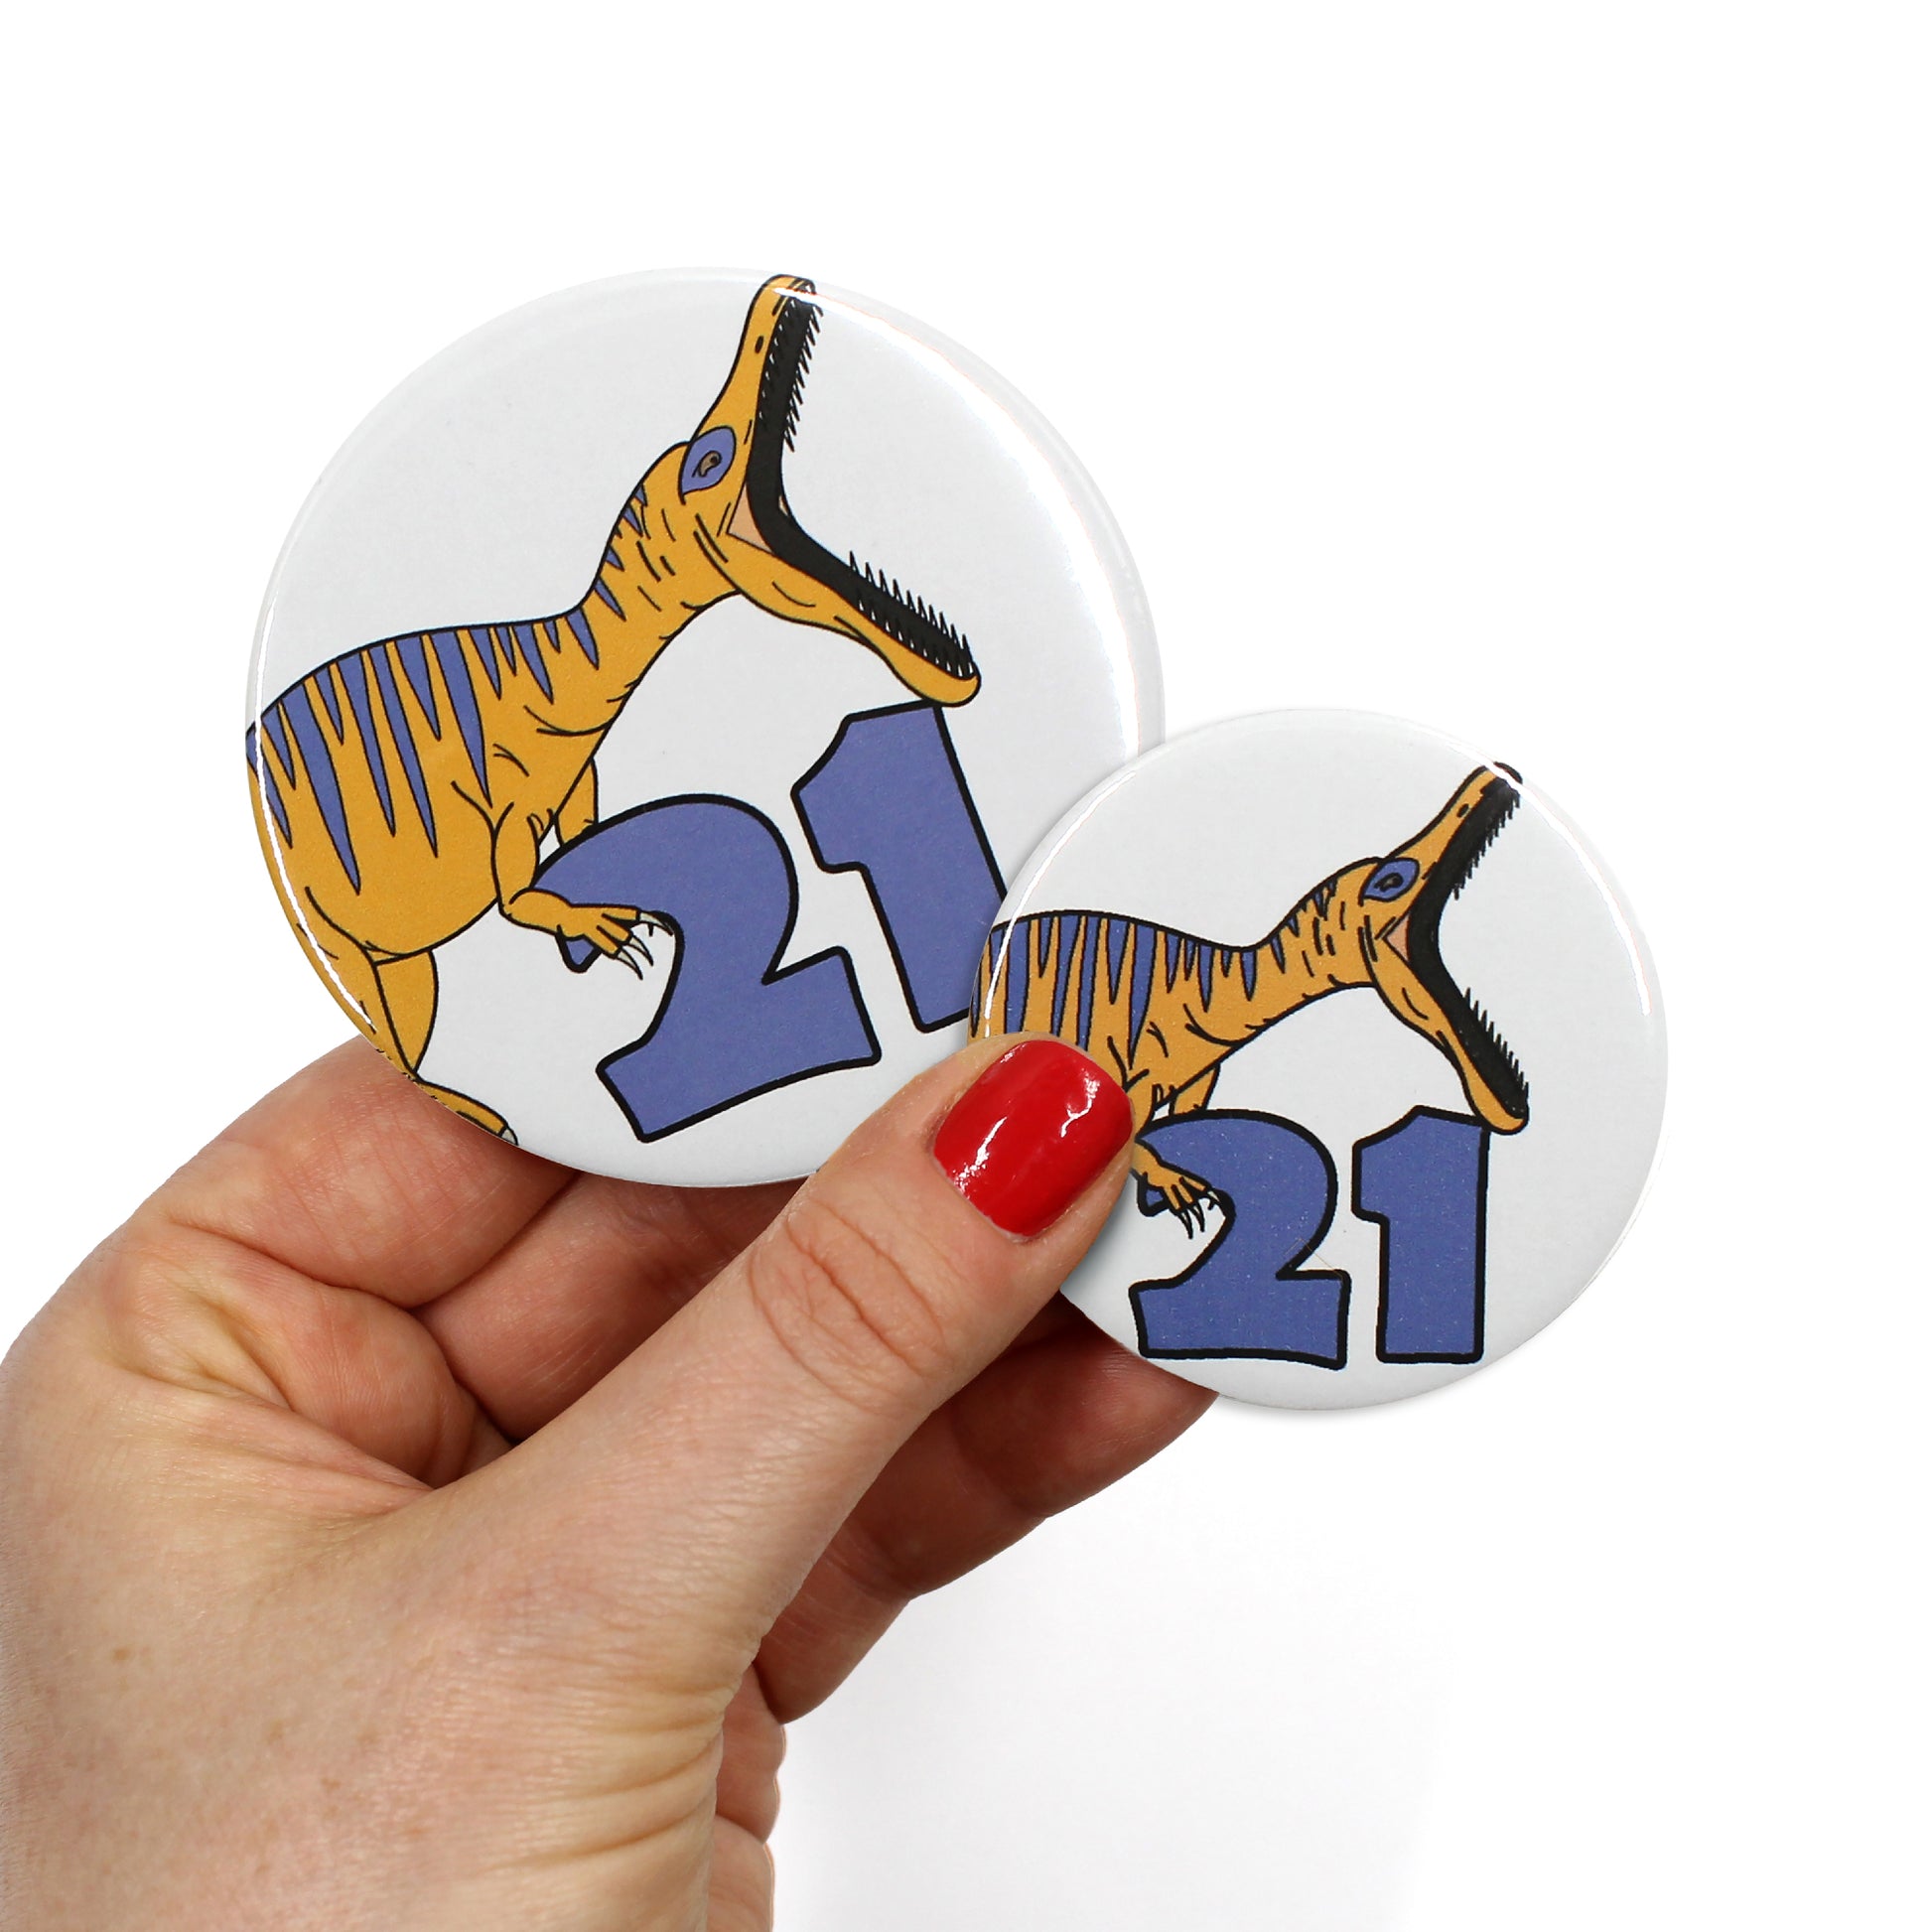 Number 21 Dinosaur Greeting badges